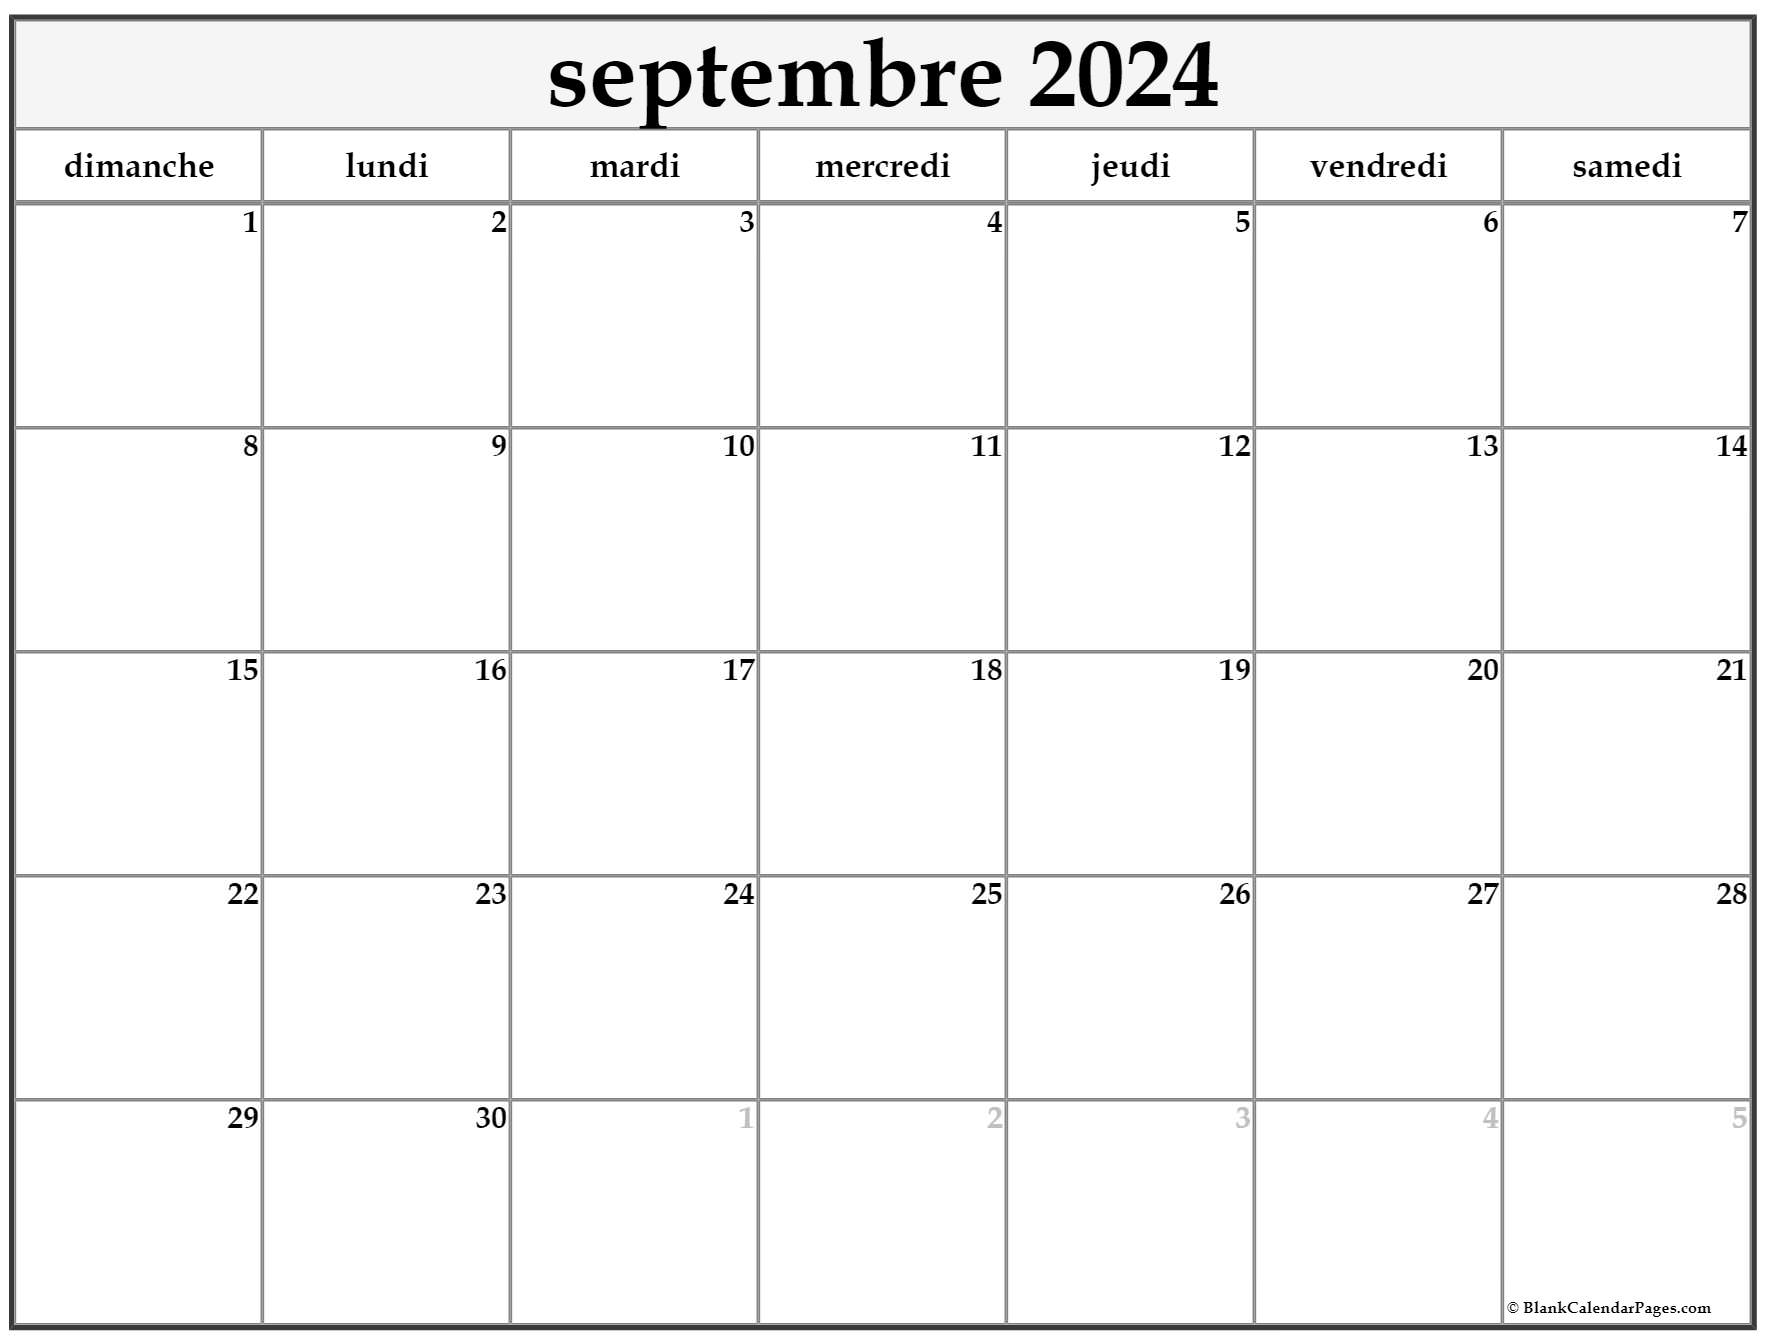 Открой календарь на май. Calendar July 2022. Календарик июнь 2023. Календарь июль. Календарь июль 2022.